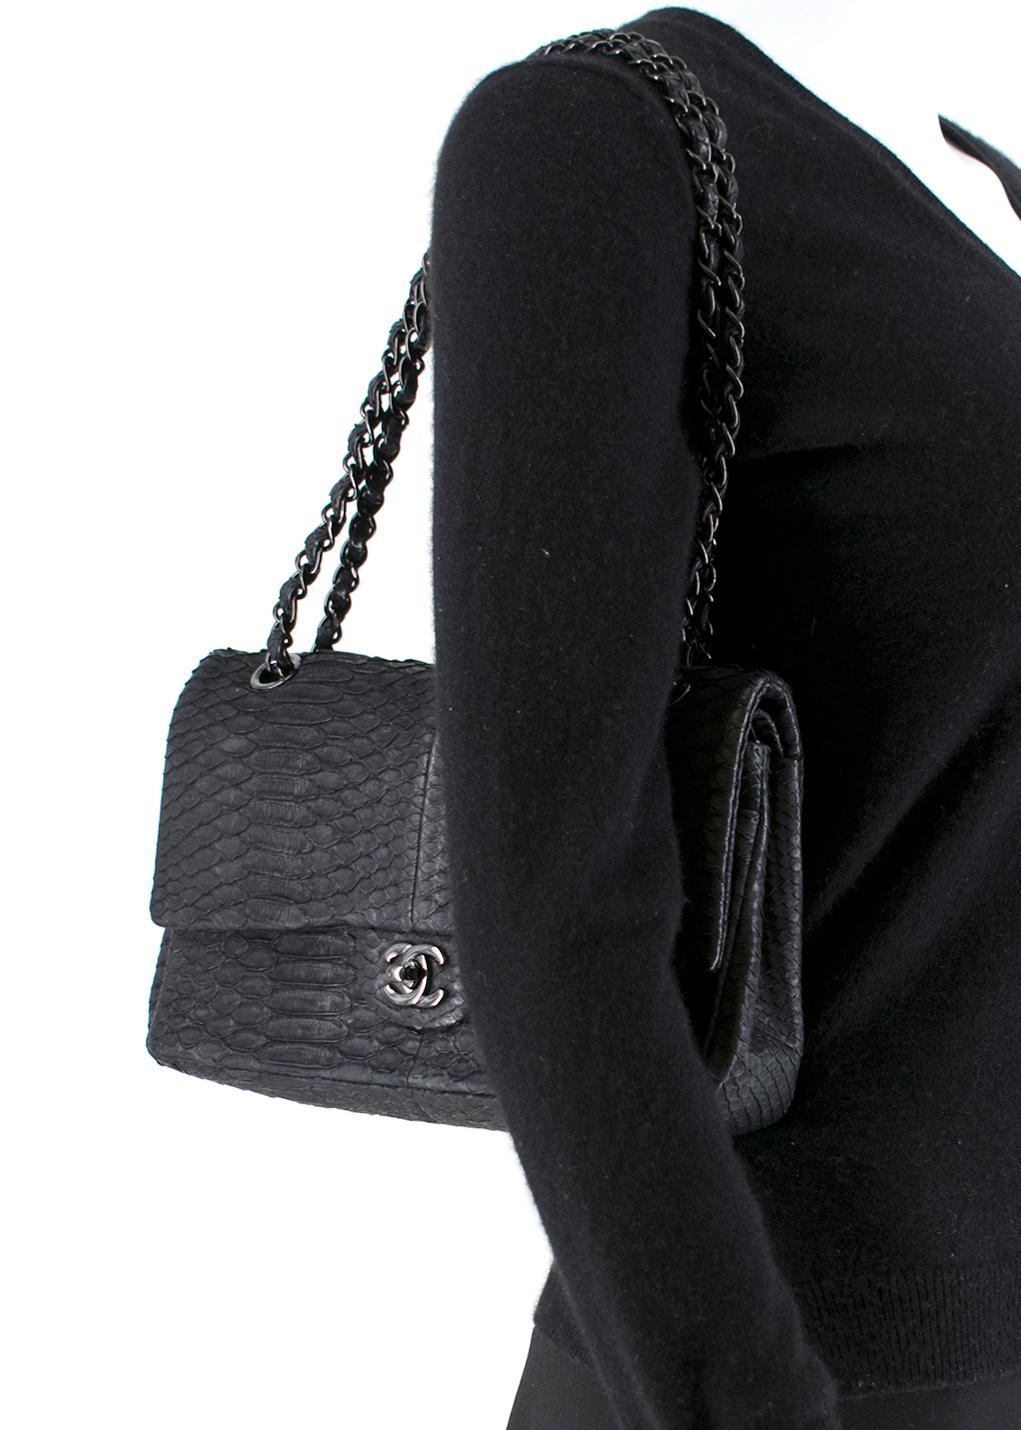 Chanel Black Python Medium Flap Bag 25cm 2